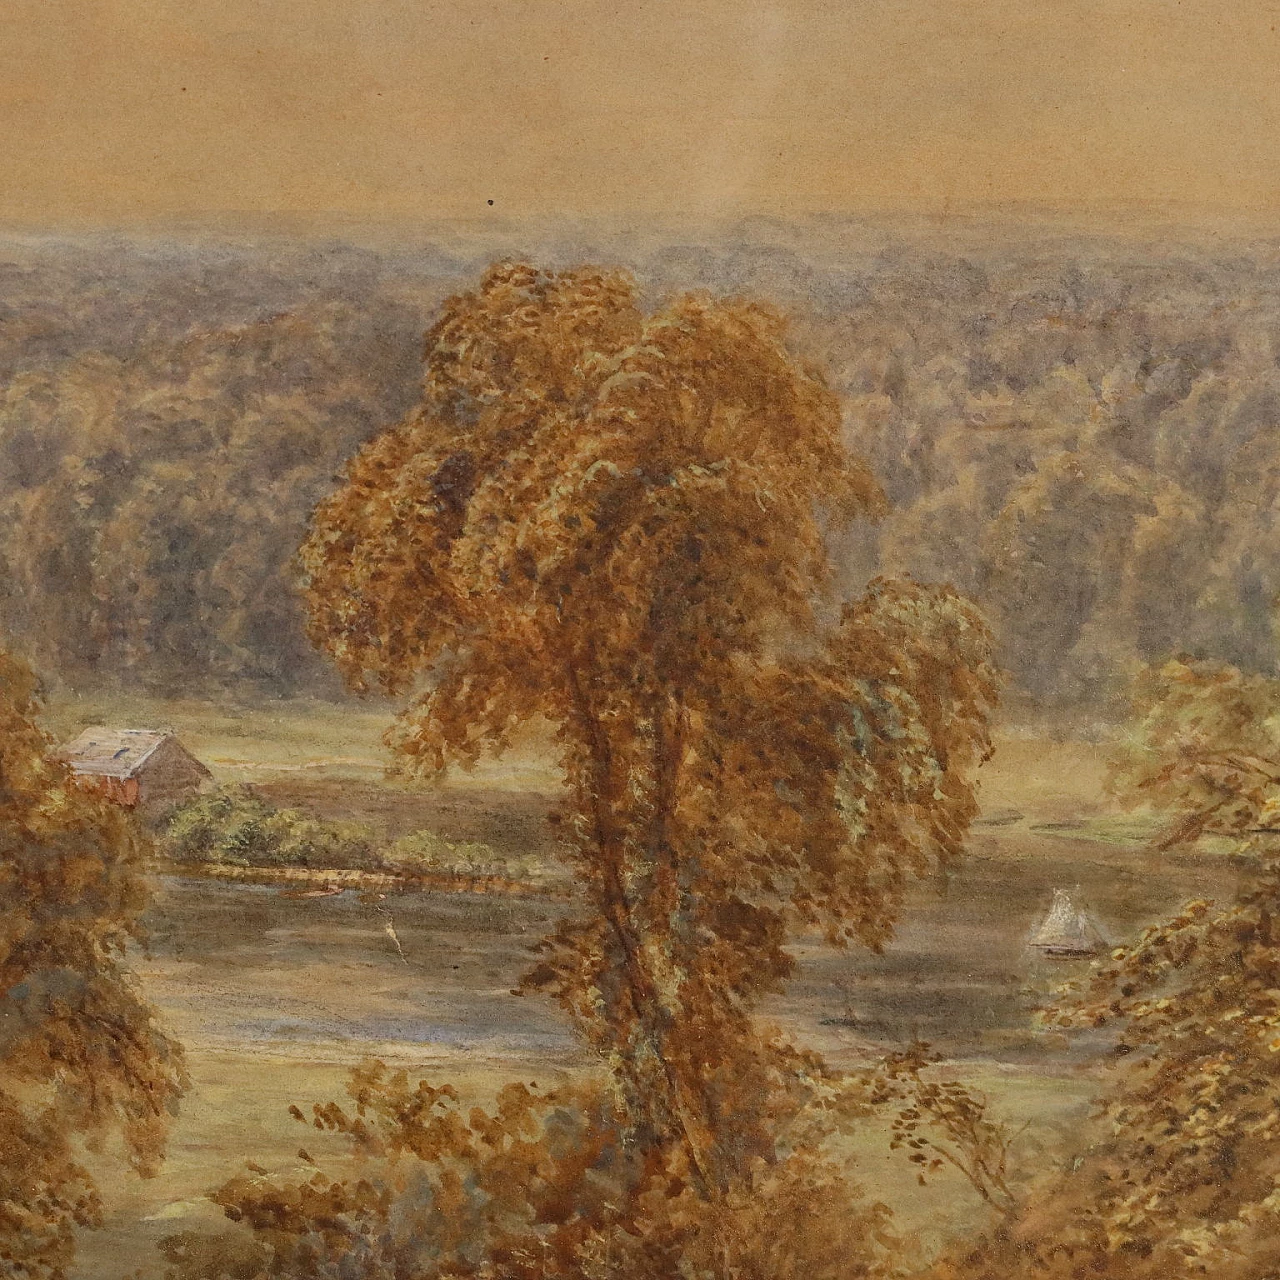 H.C. Warren, River landscape with lumberjacks, watercolor, 1878 7